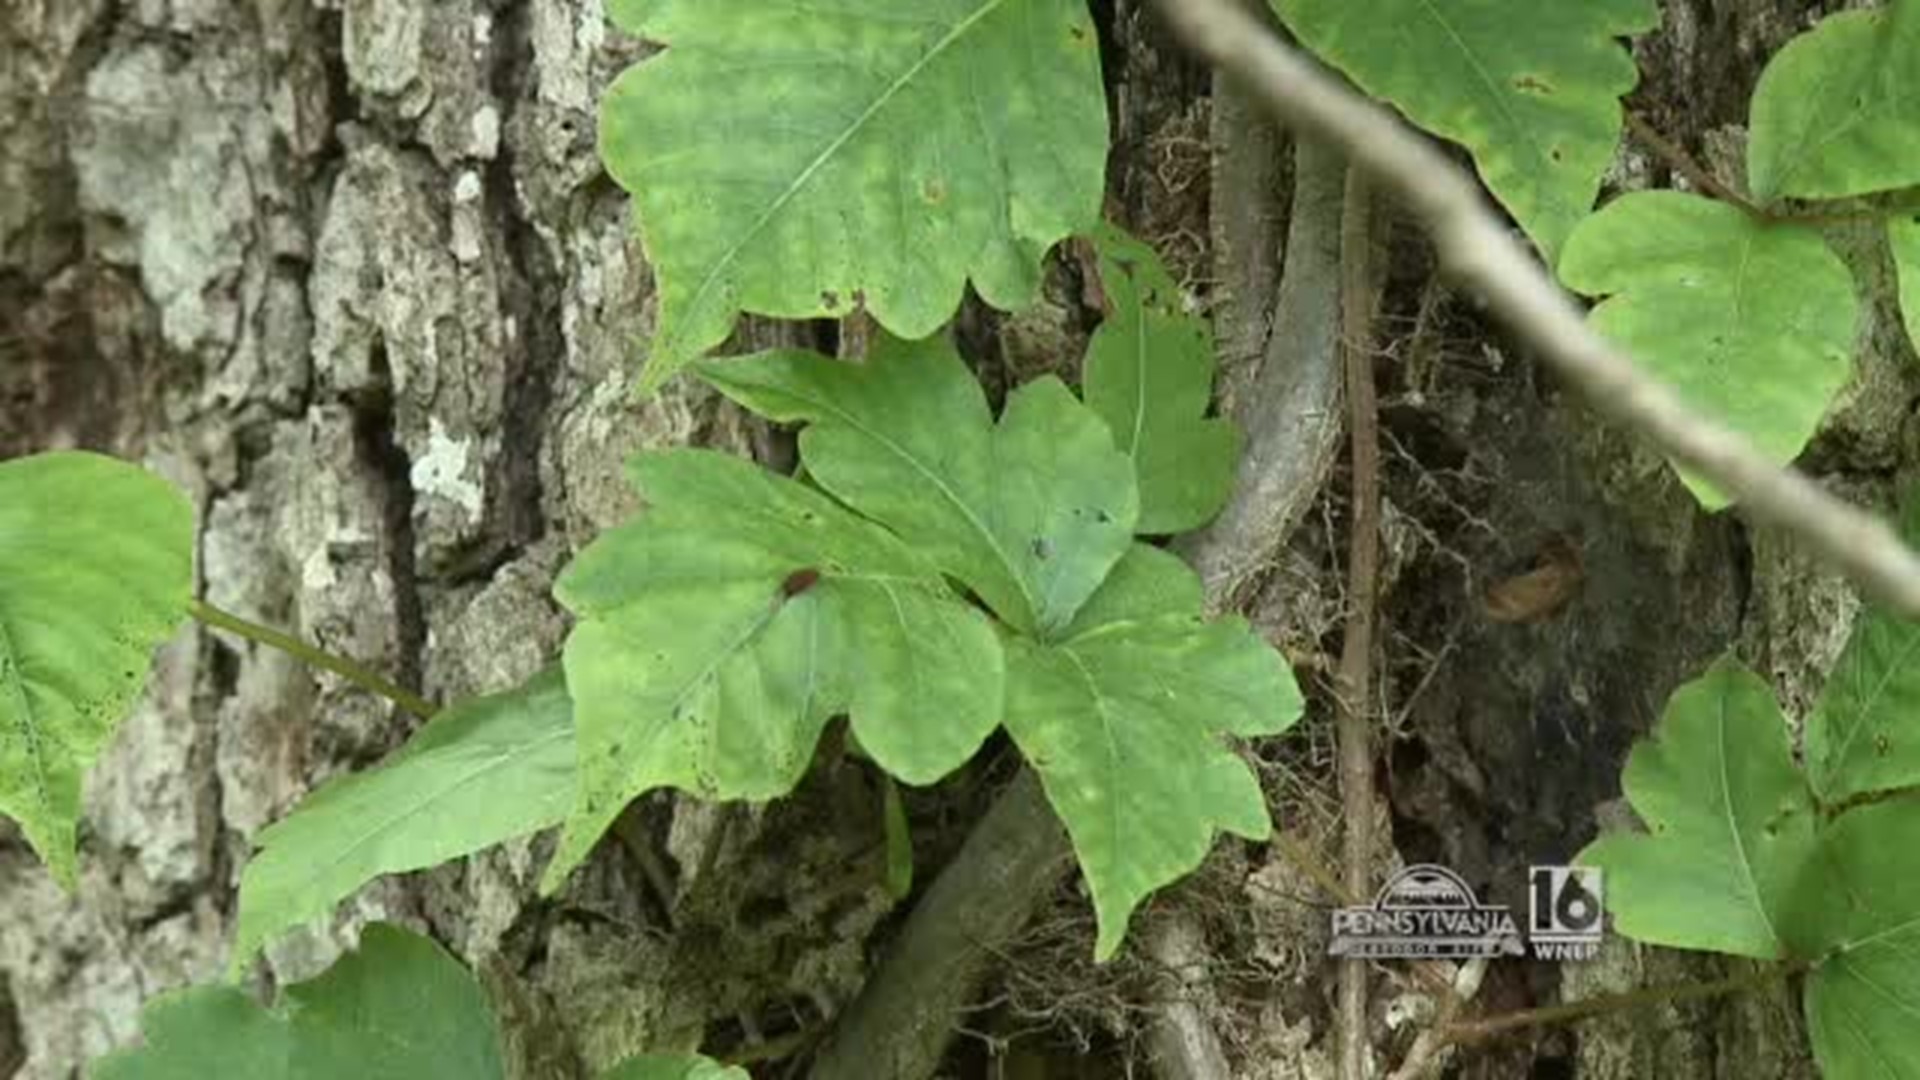 Poison Ivy Identification